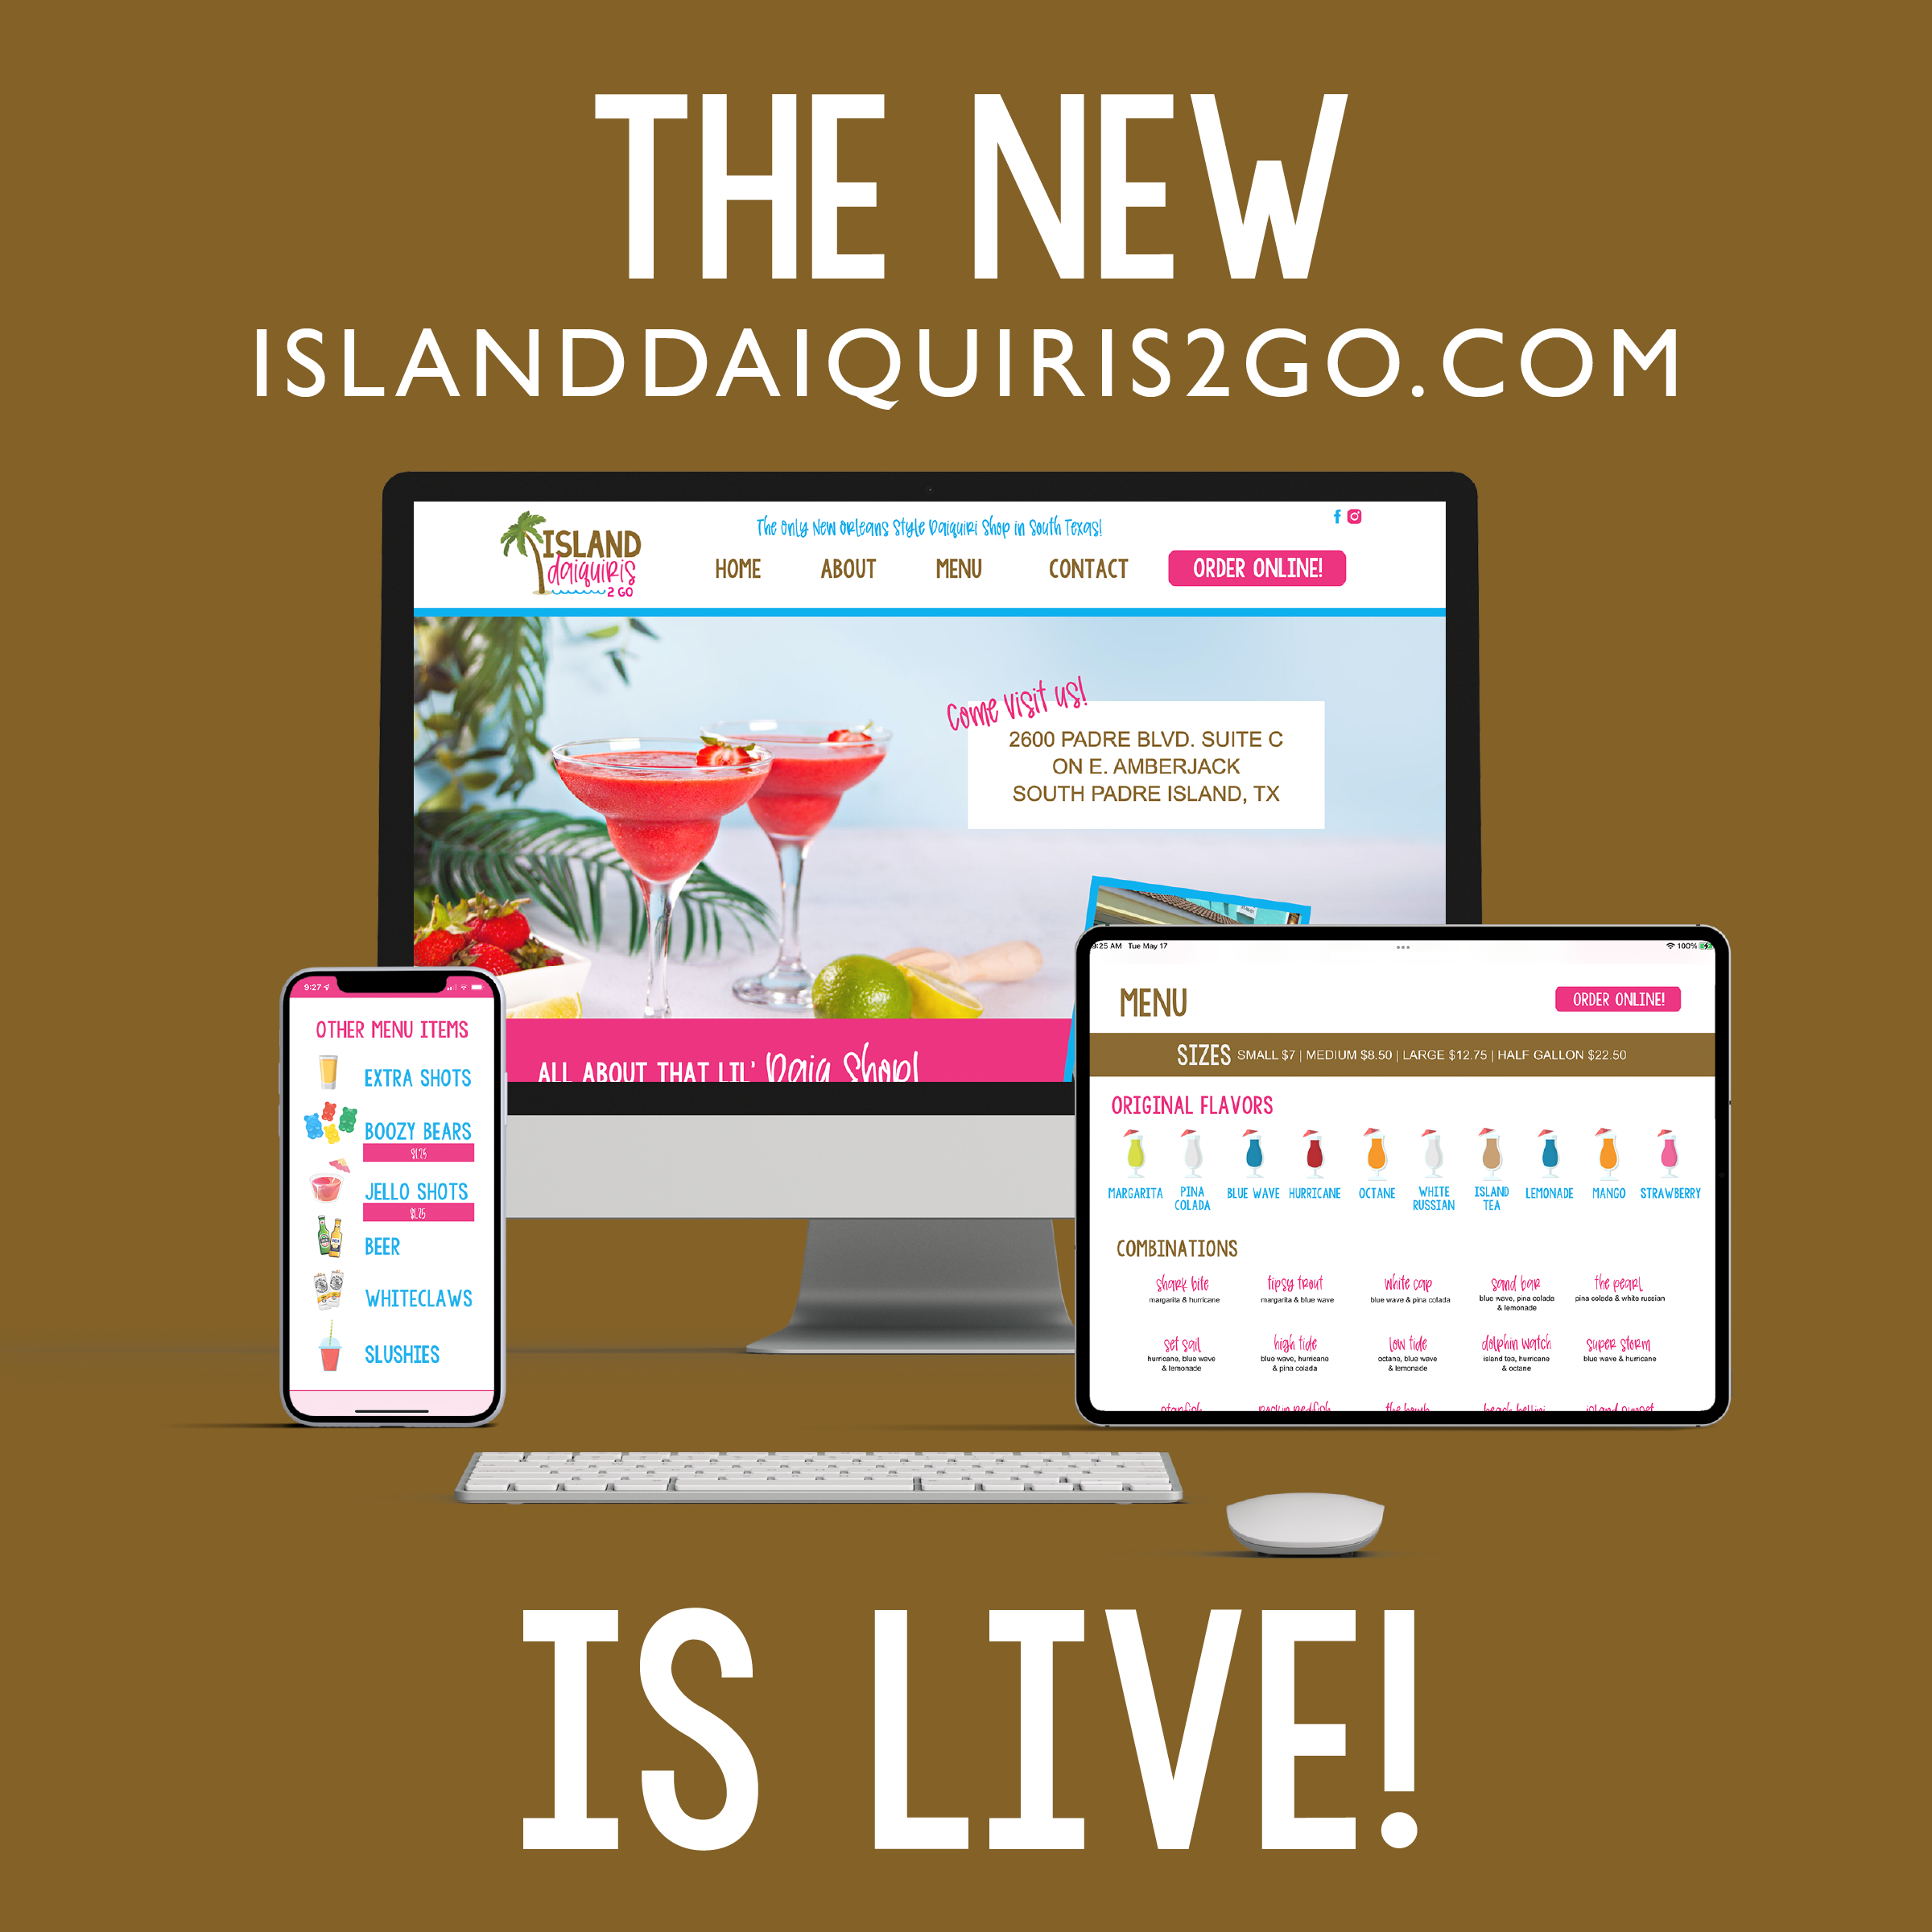 Island Daiquiris 2 Go Website Launch